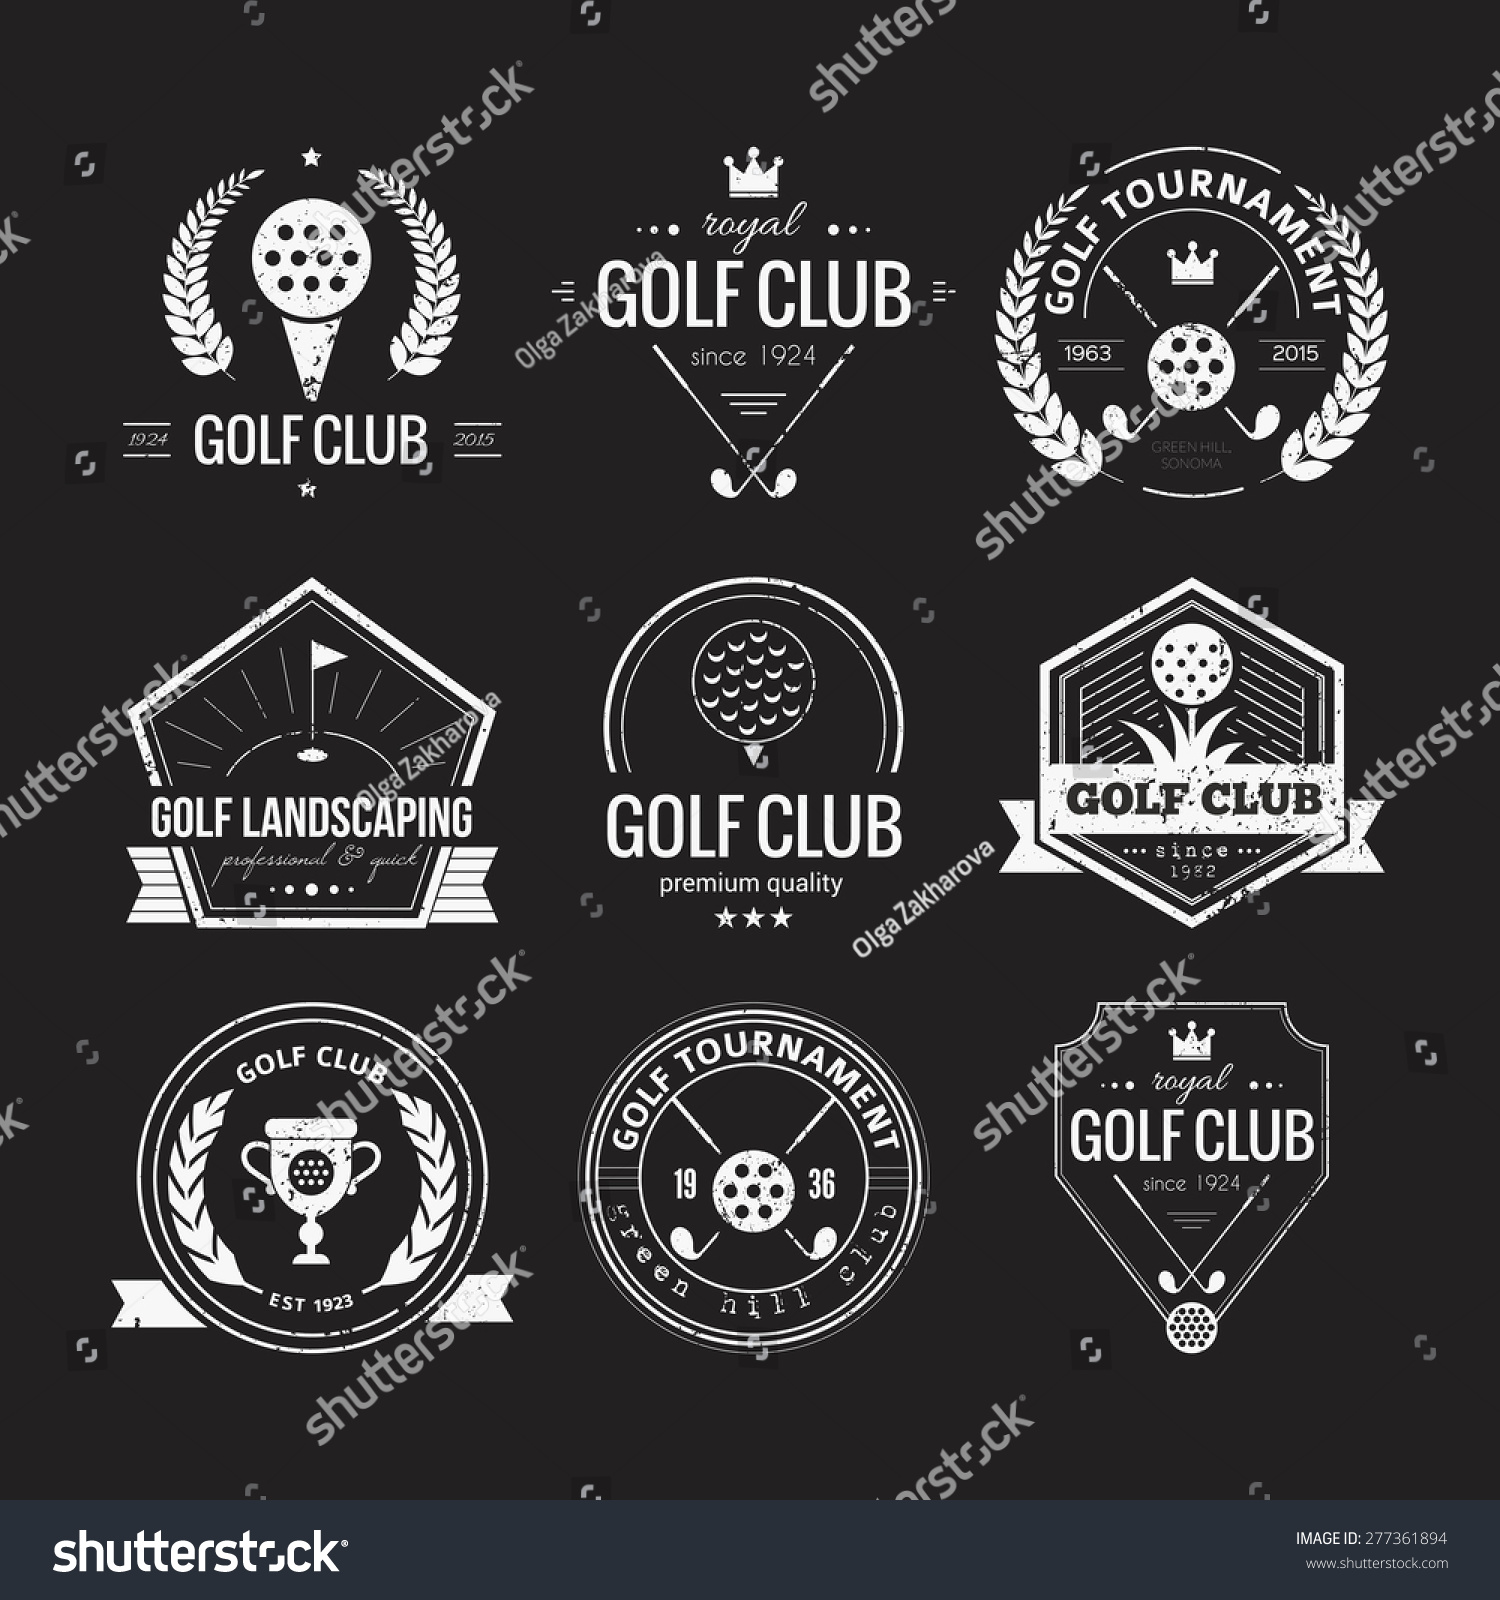 Set Golf Club Logo Templates Hipster Stock Vector 277361894 - Shutterstock